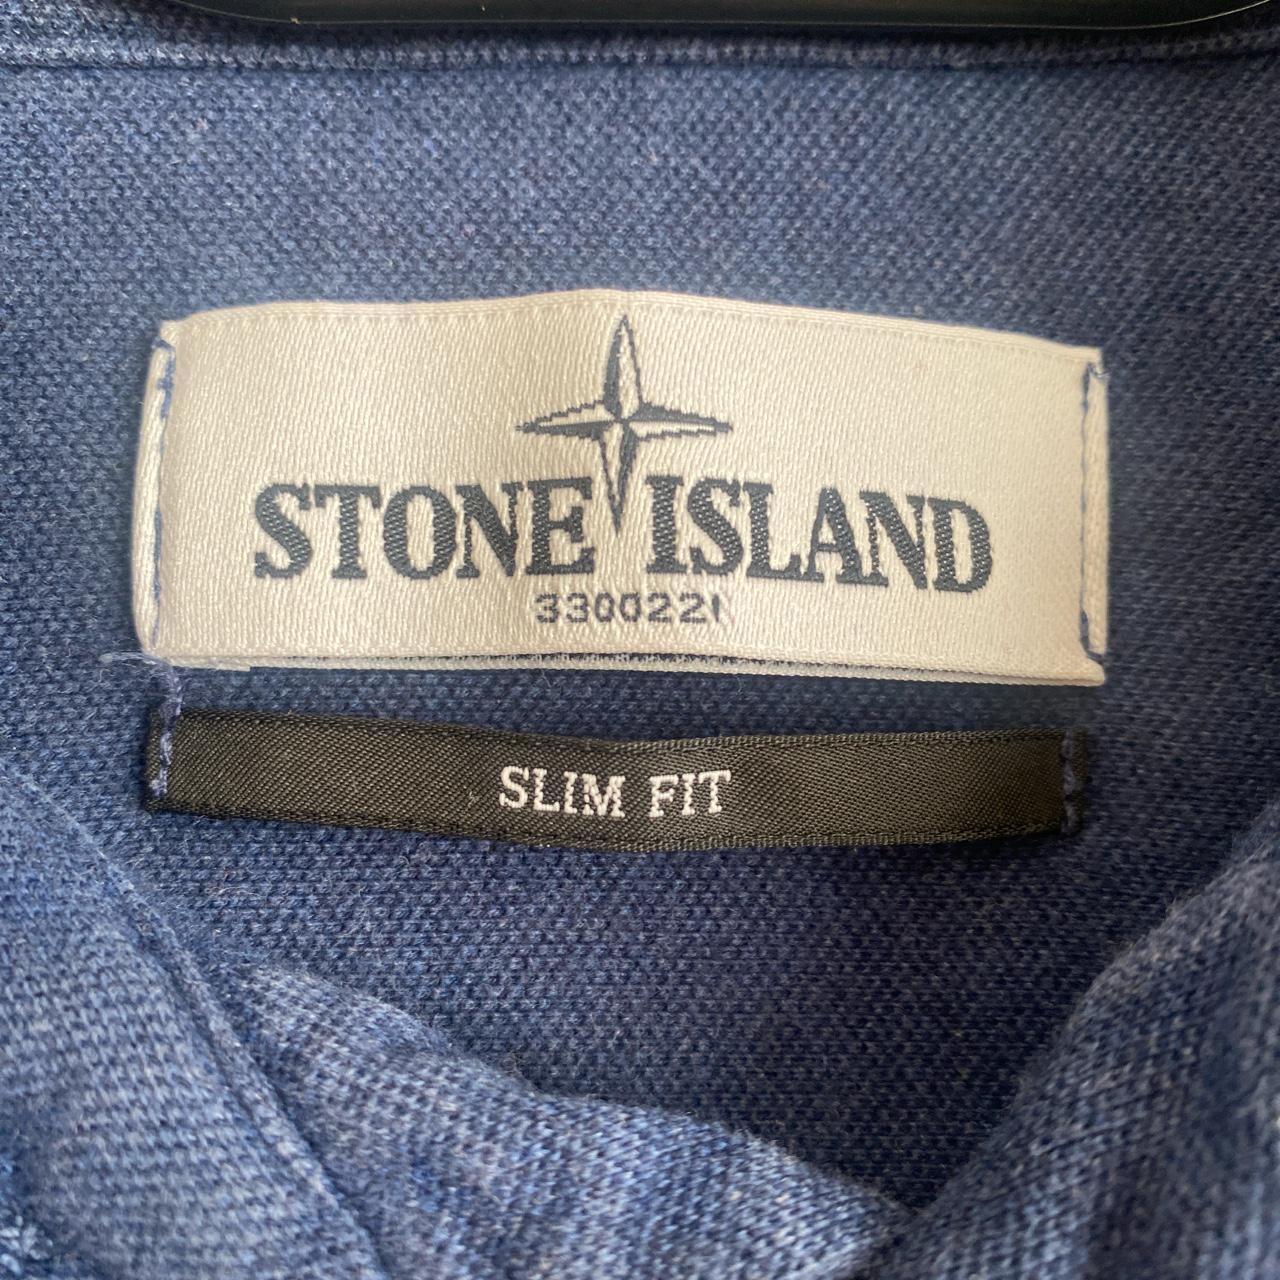 Stone island long sleeved polo shirt Navy men’s -... - Depop